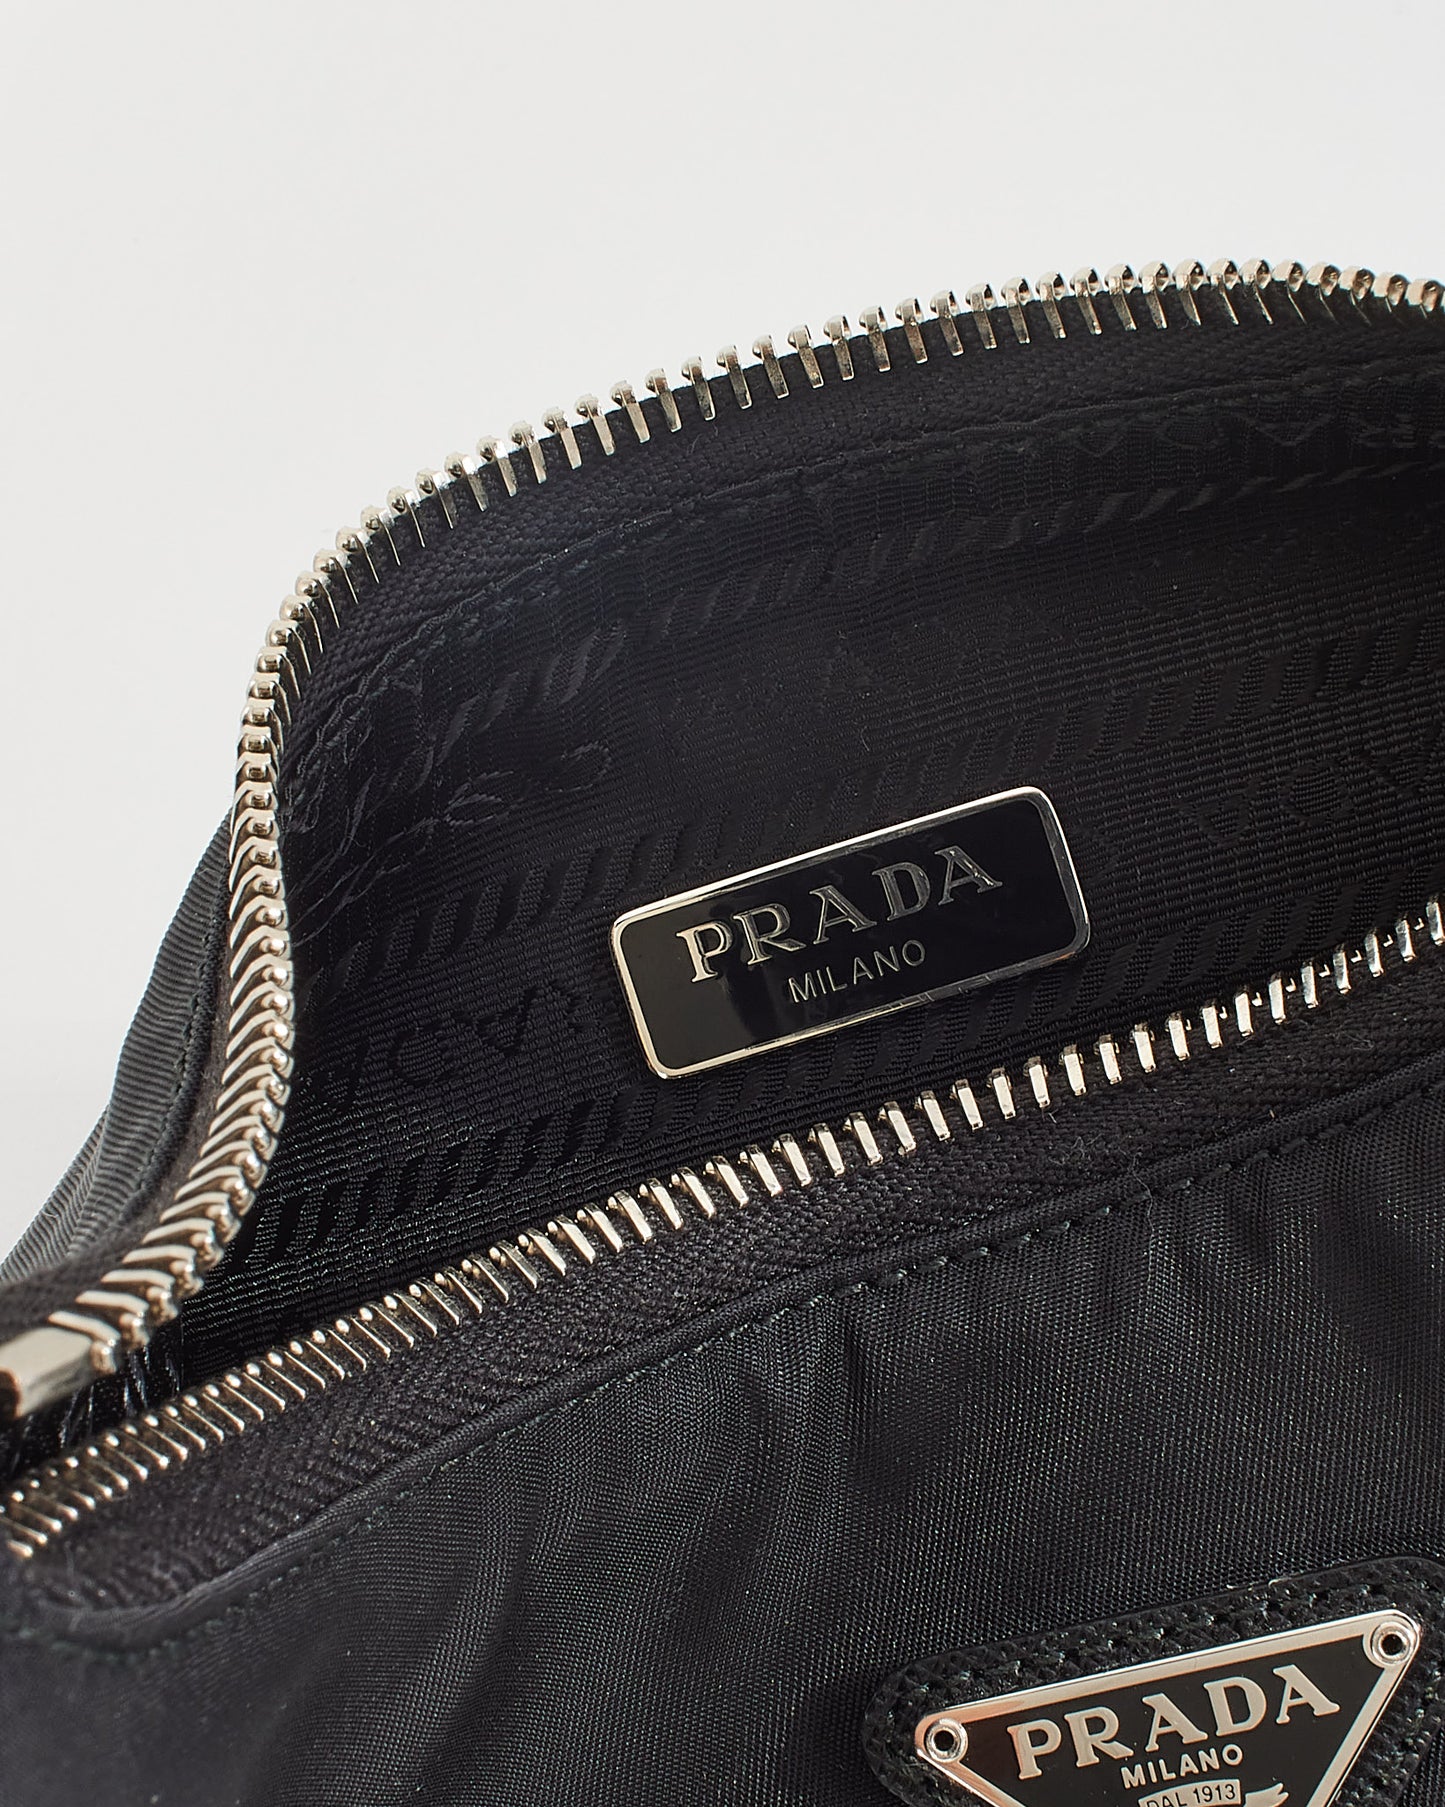 Prada Black Nylon Re-Edition 2005 Mini Bag